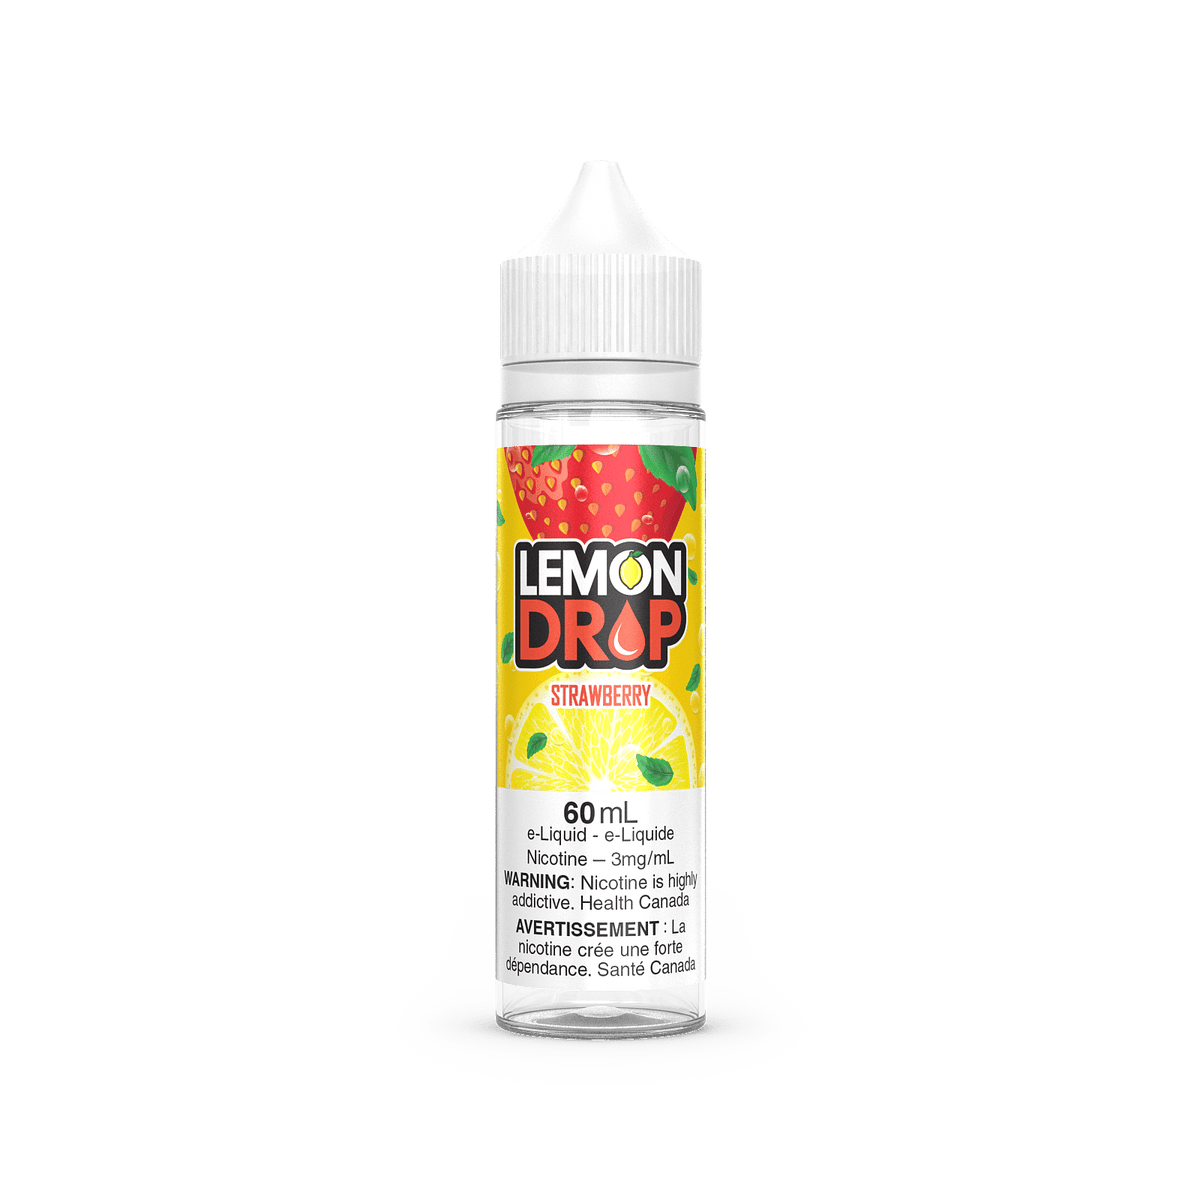 Lemon Drop - Strawberry available on Canada online vape shop